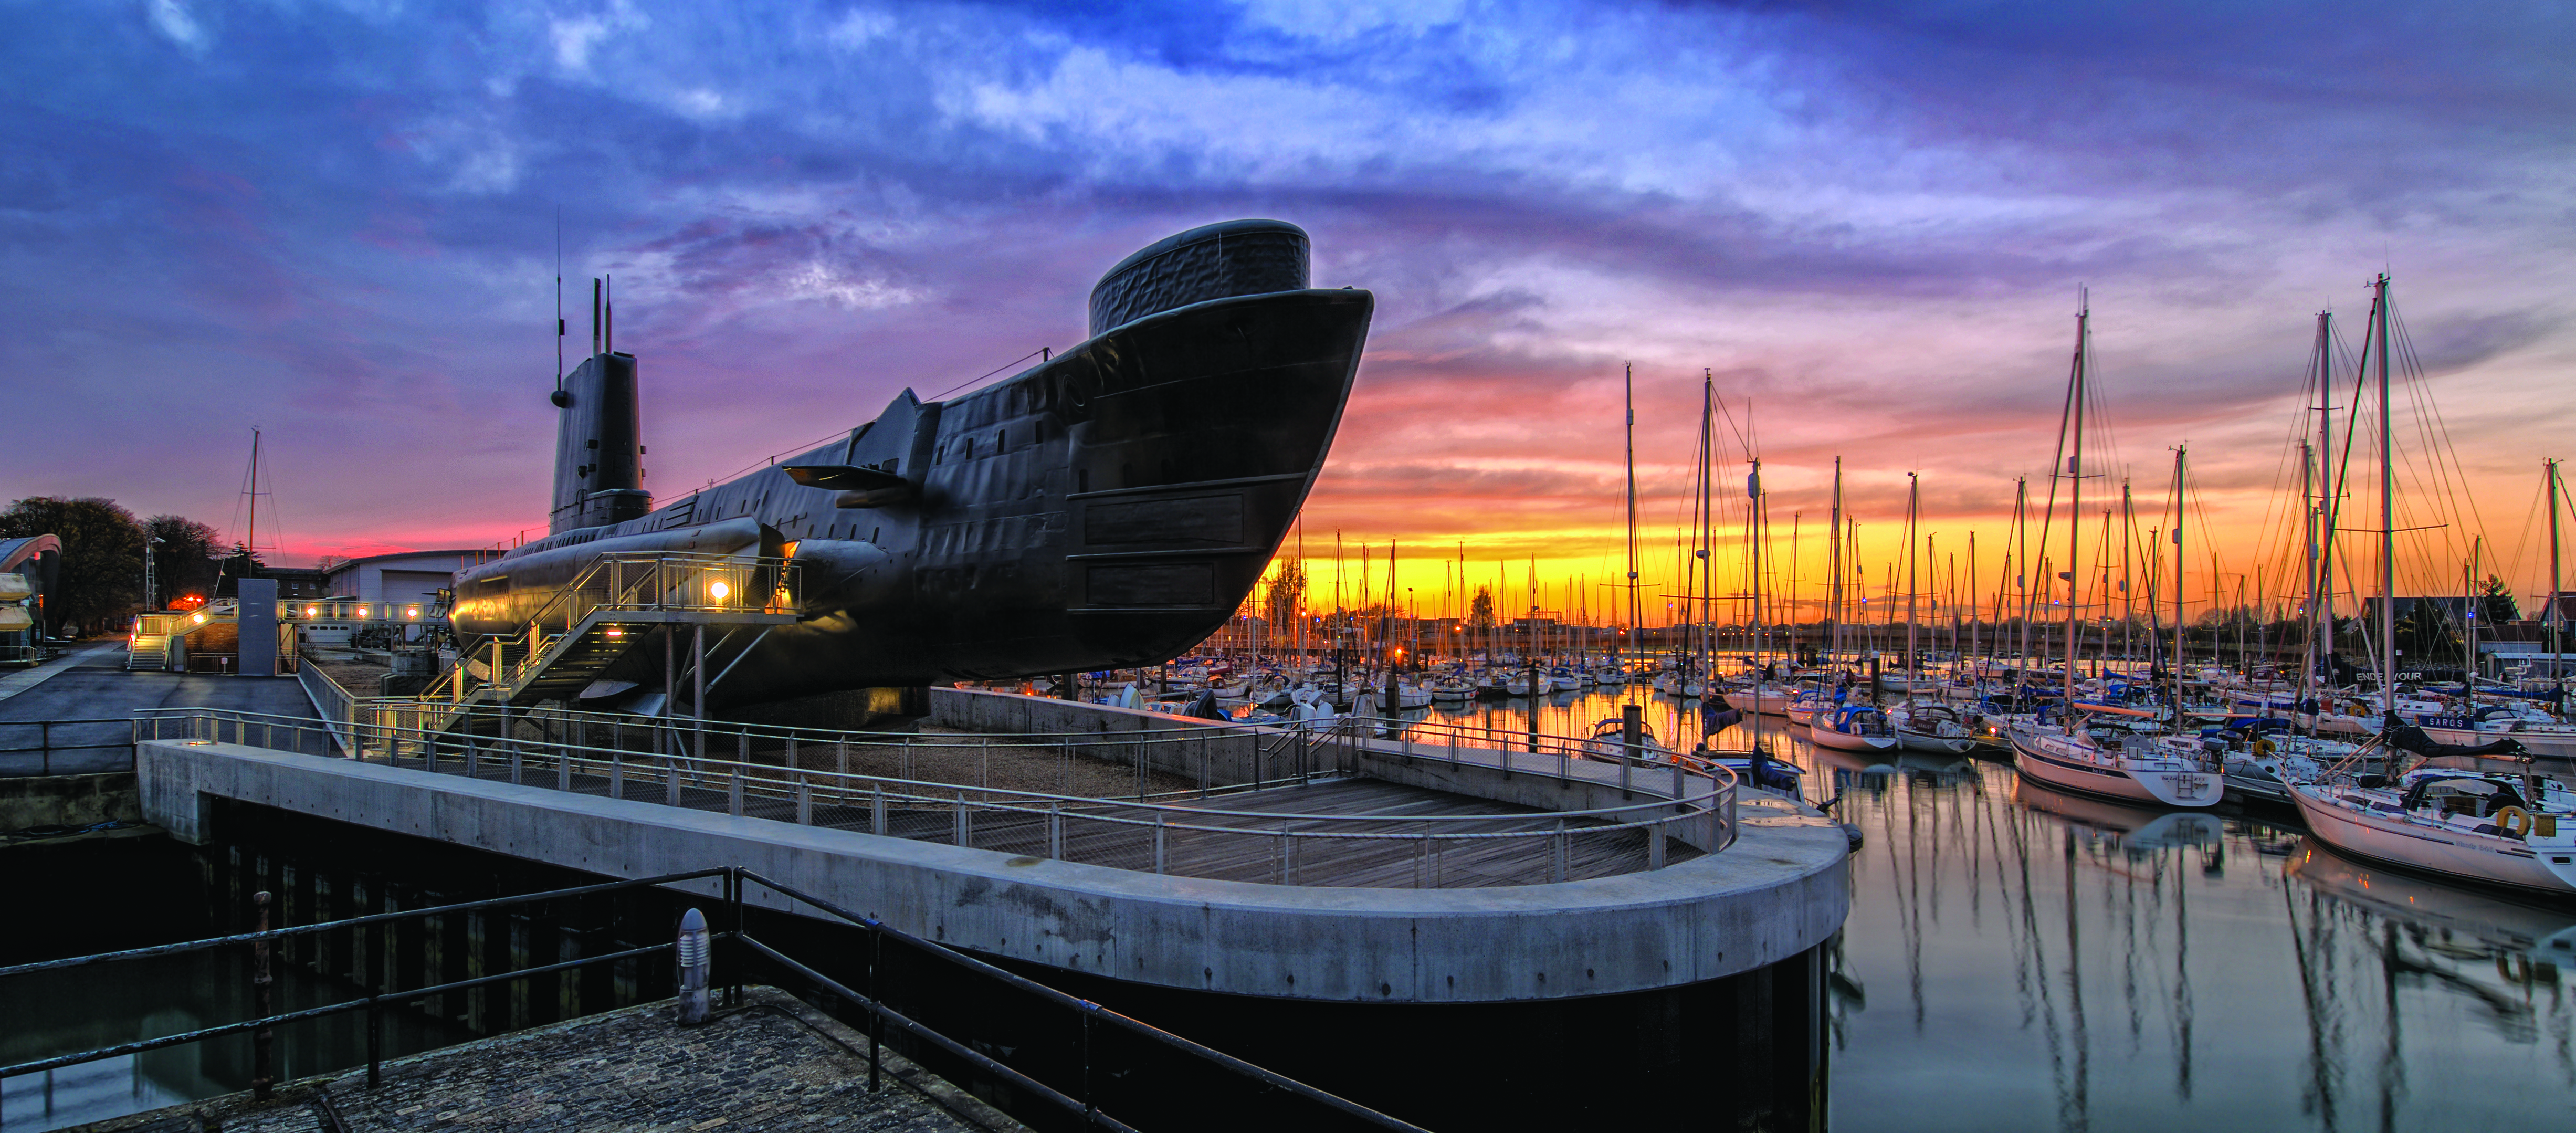 HMS Alliance at Sunset - Portsmouth Historic Dockyard